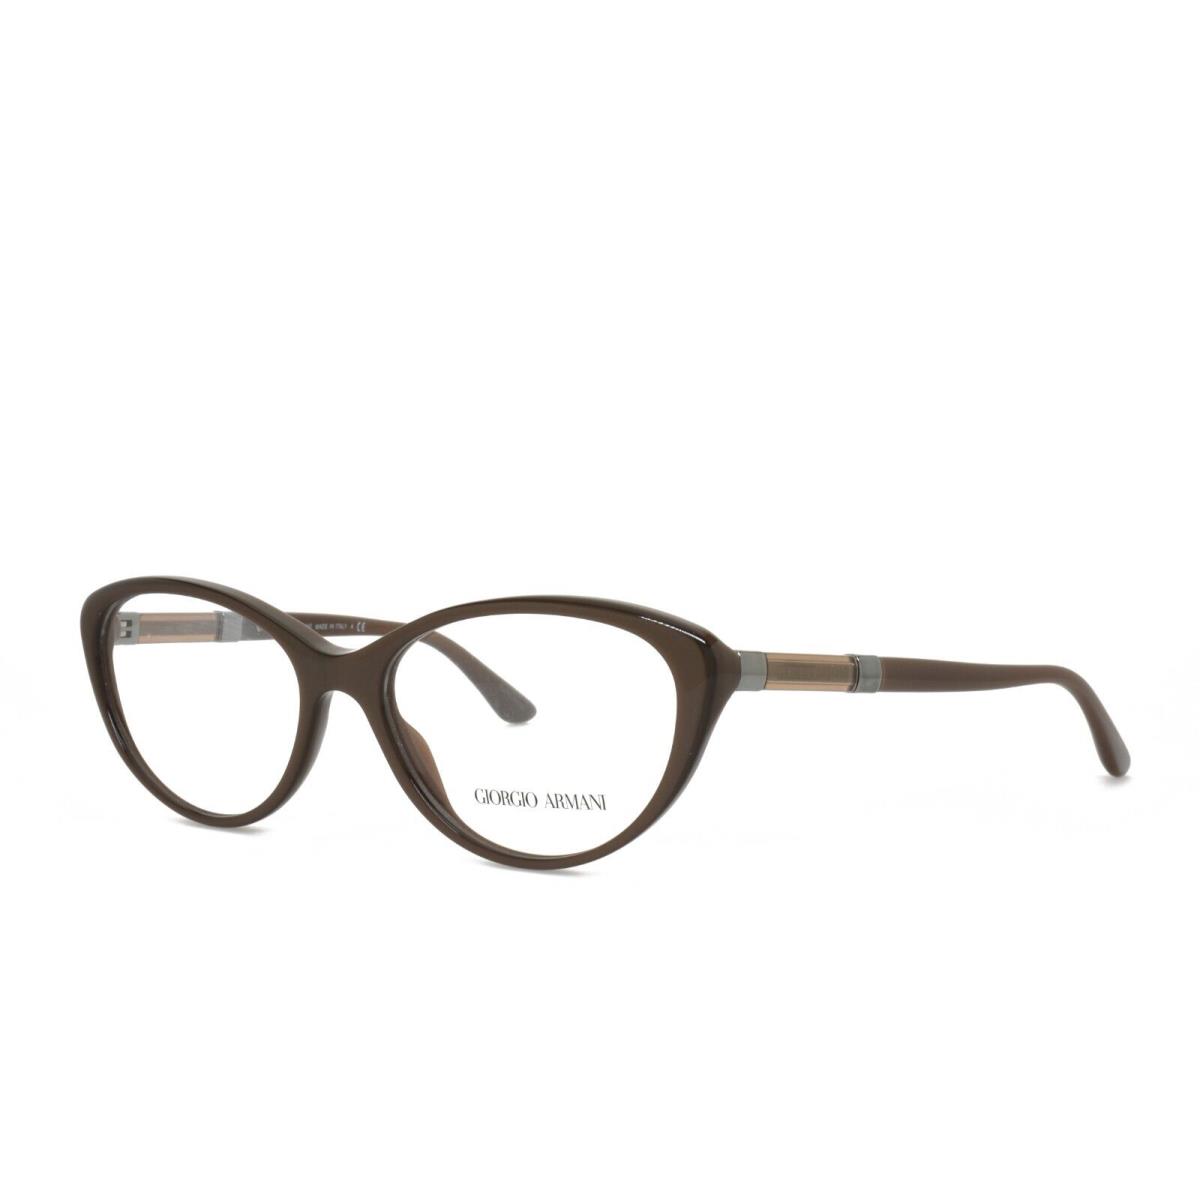 Giorgio Armani 7061 5337 54-16-140 Brown Eyeglasses Frames